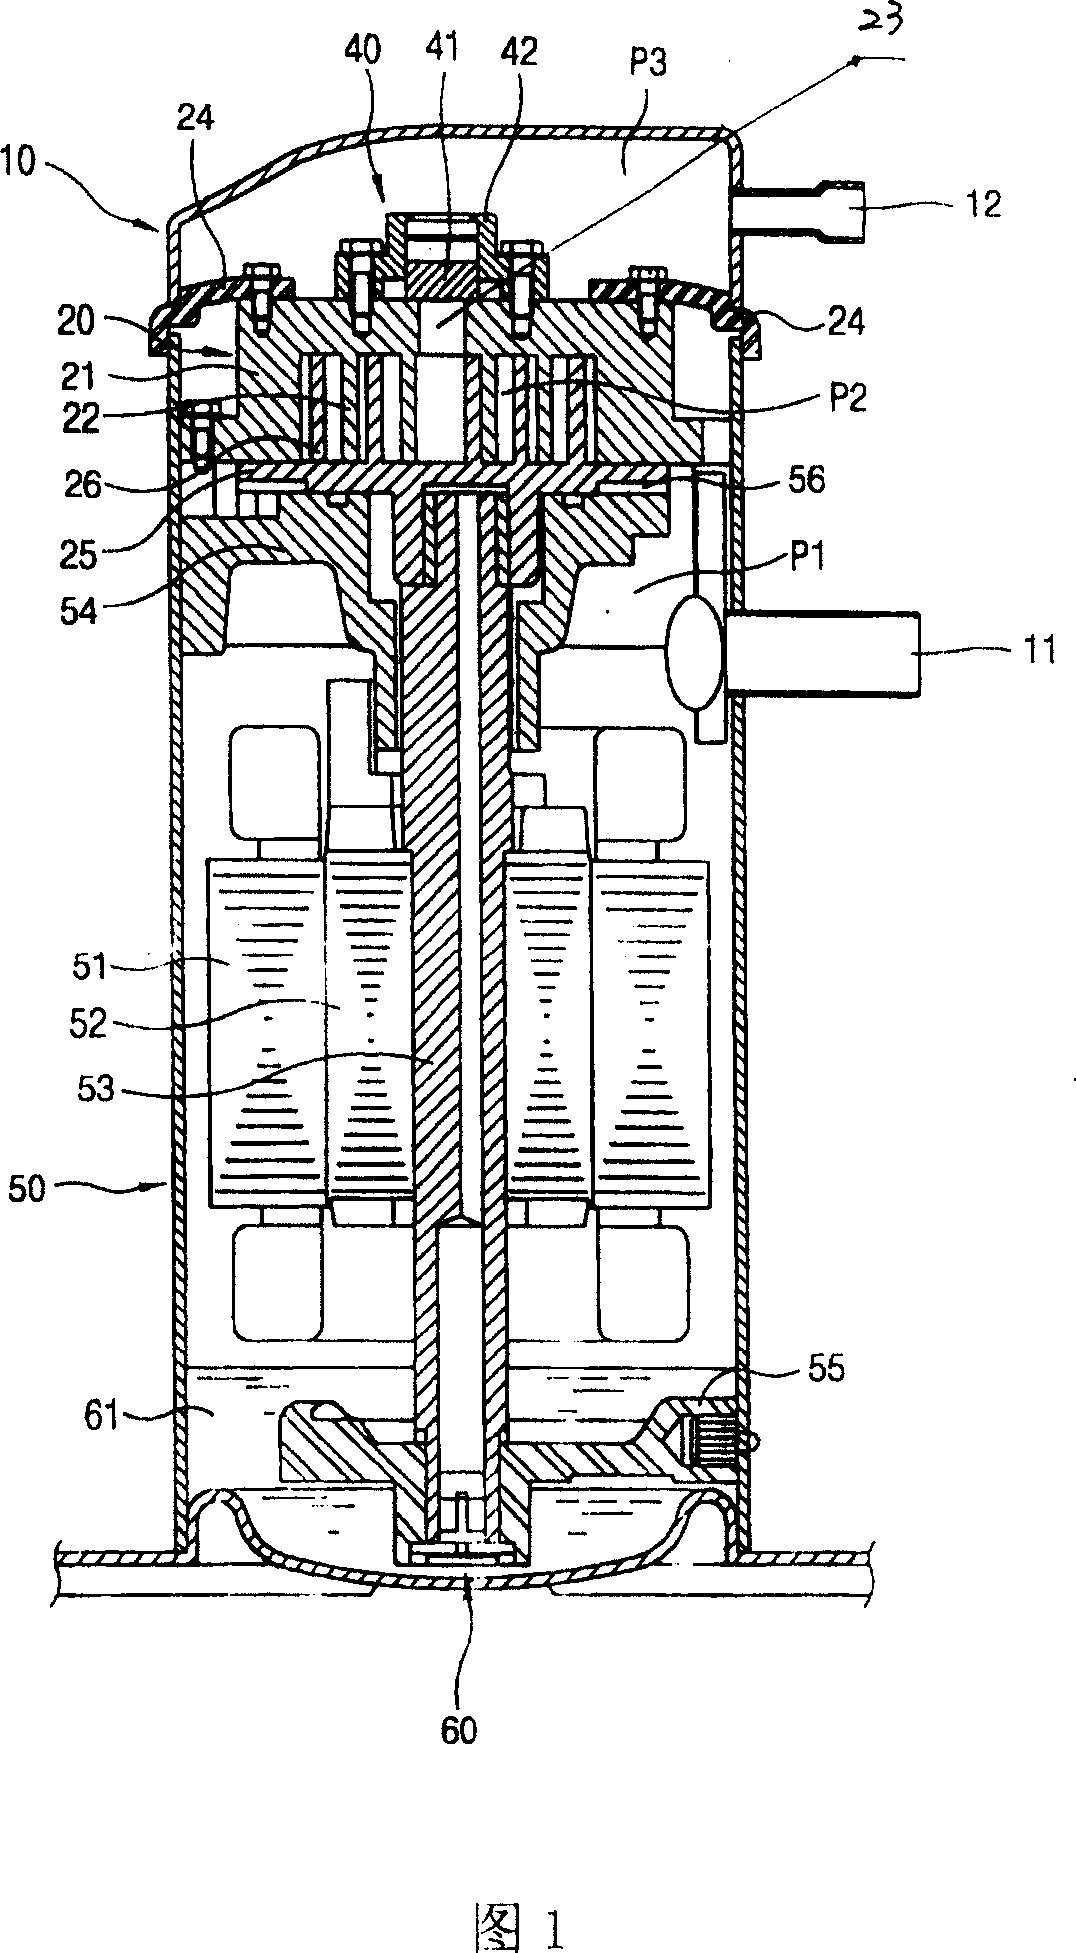 Anti-reverse device of vortex compressor